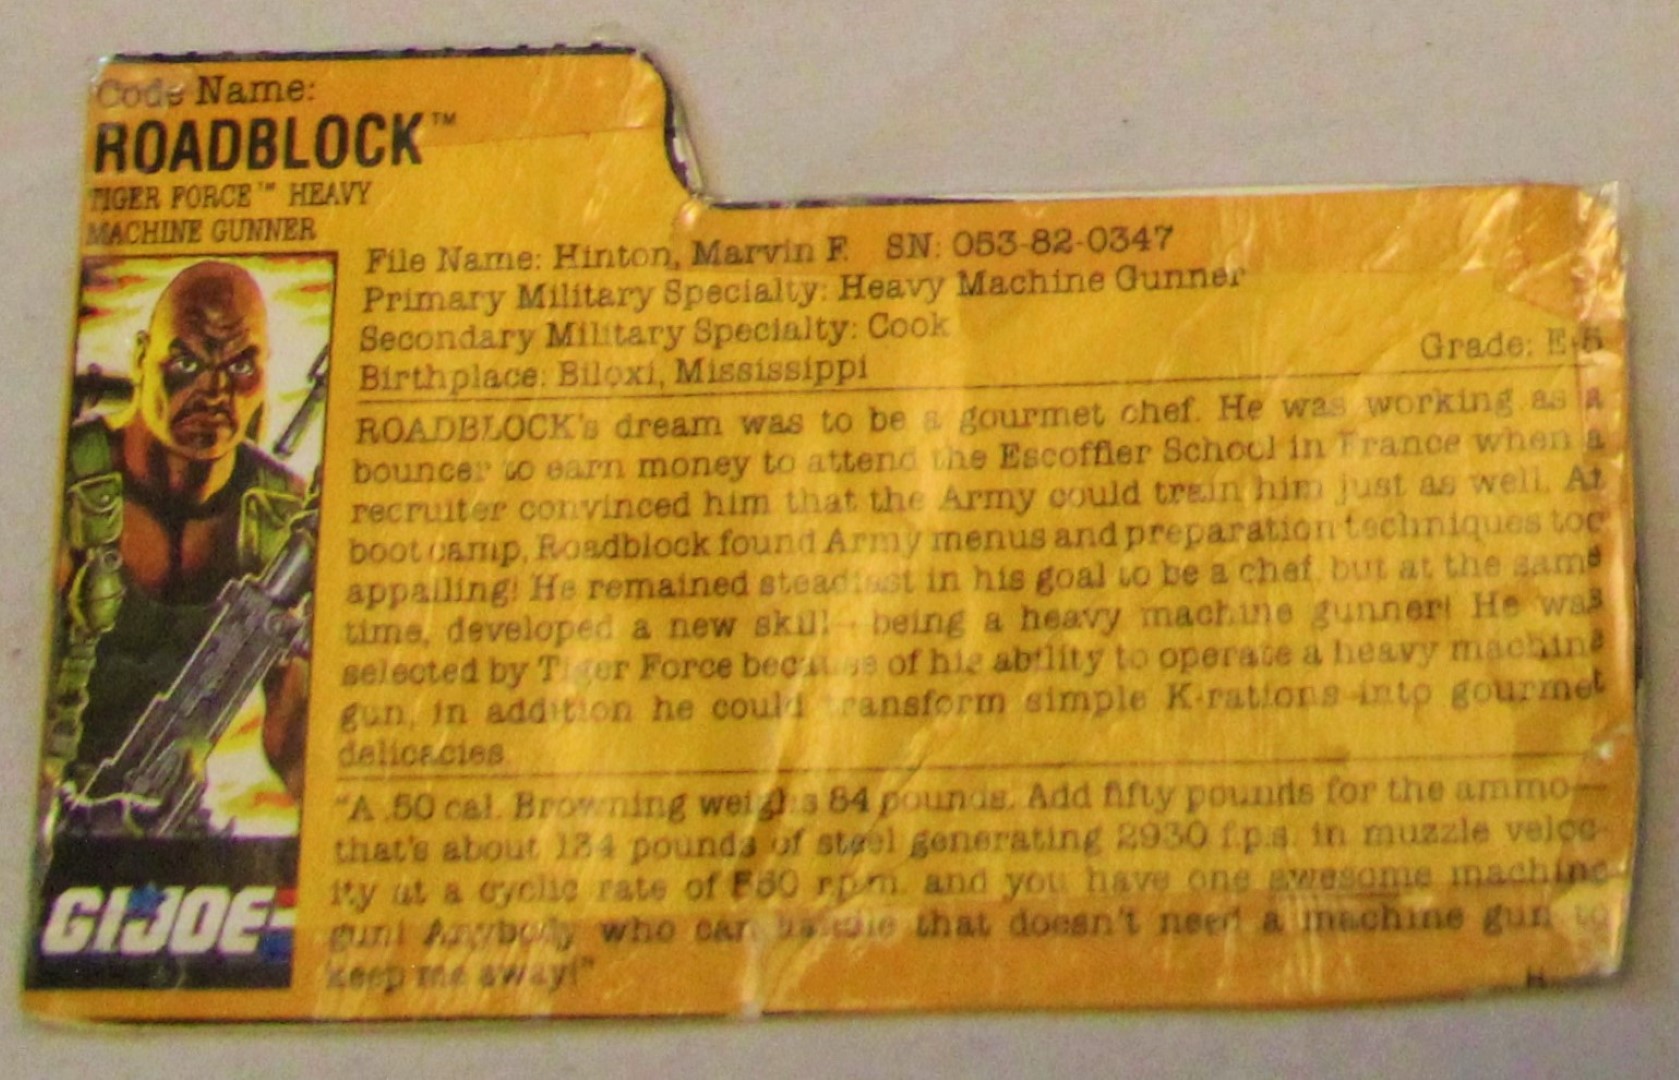 1988 tiger force roadbloack file card